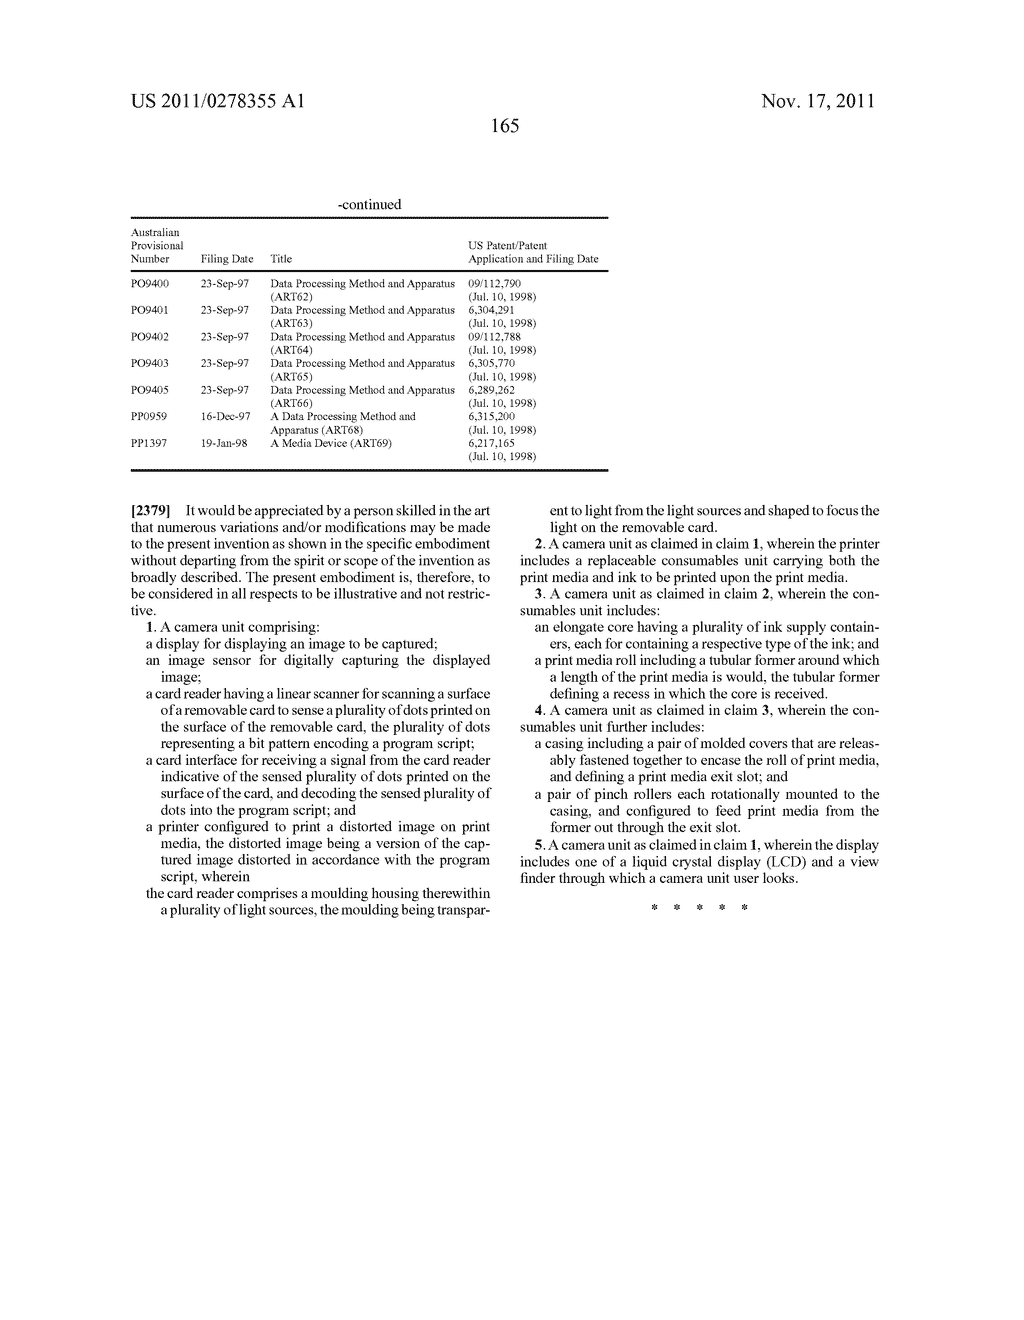 CAMERA UNIT INCOPORATING PROGRAM SCRIPT SCANNER - diagram, schematic, and image 306